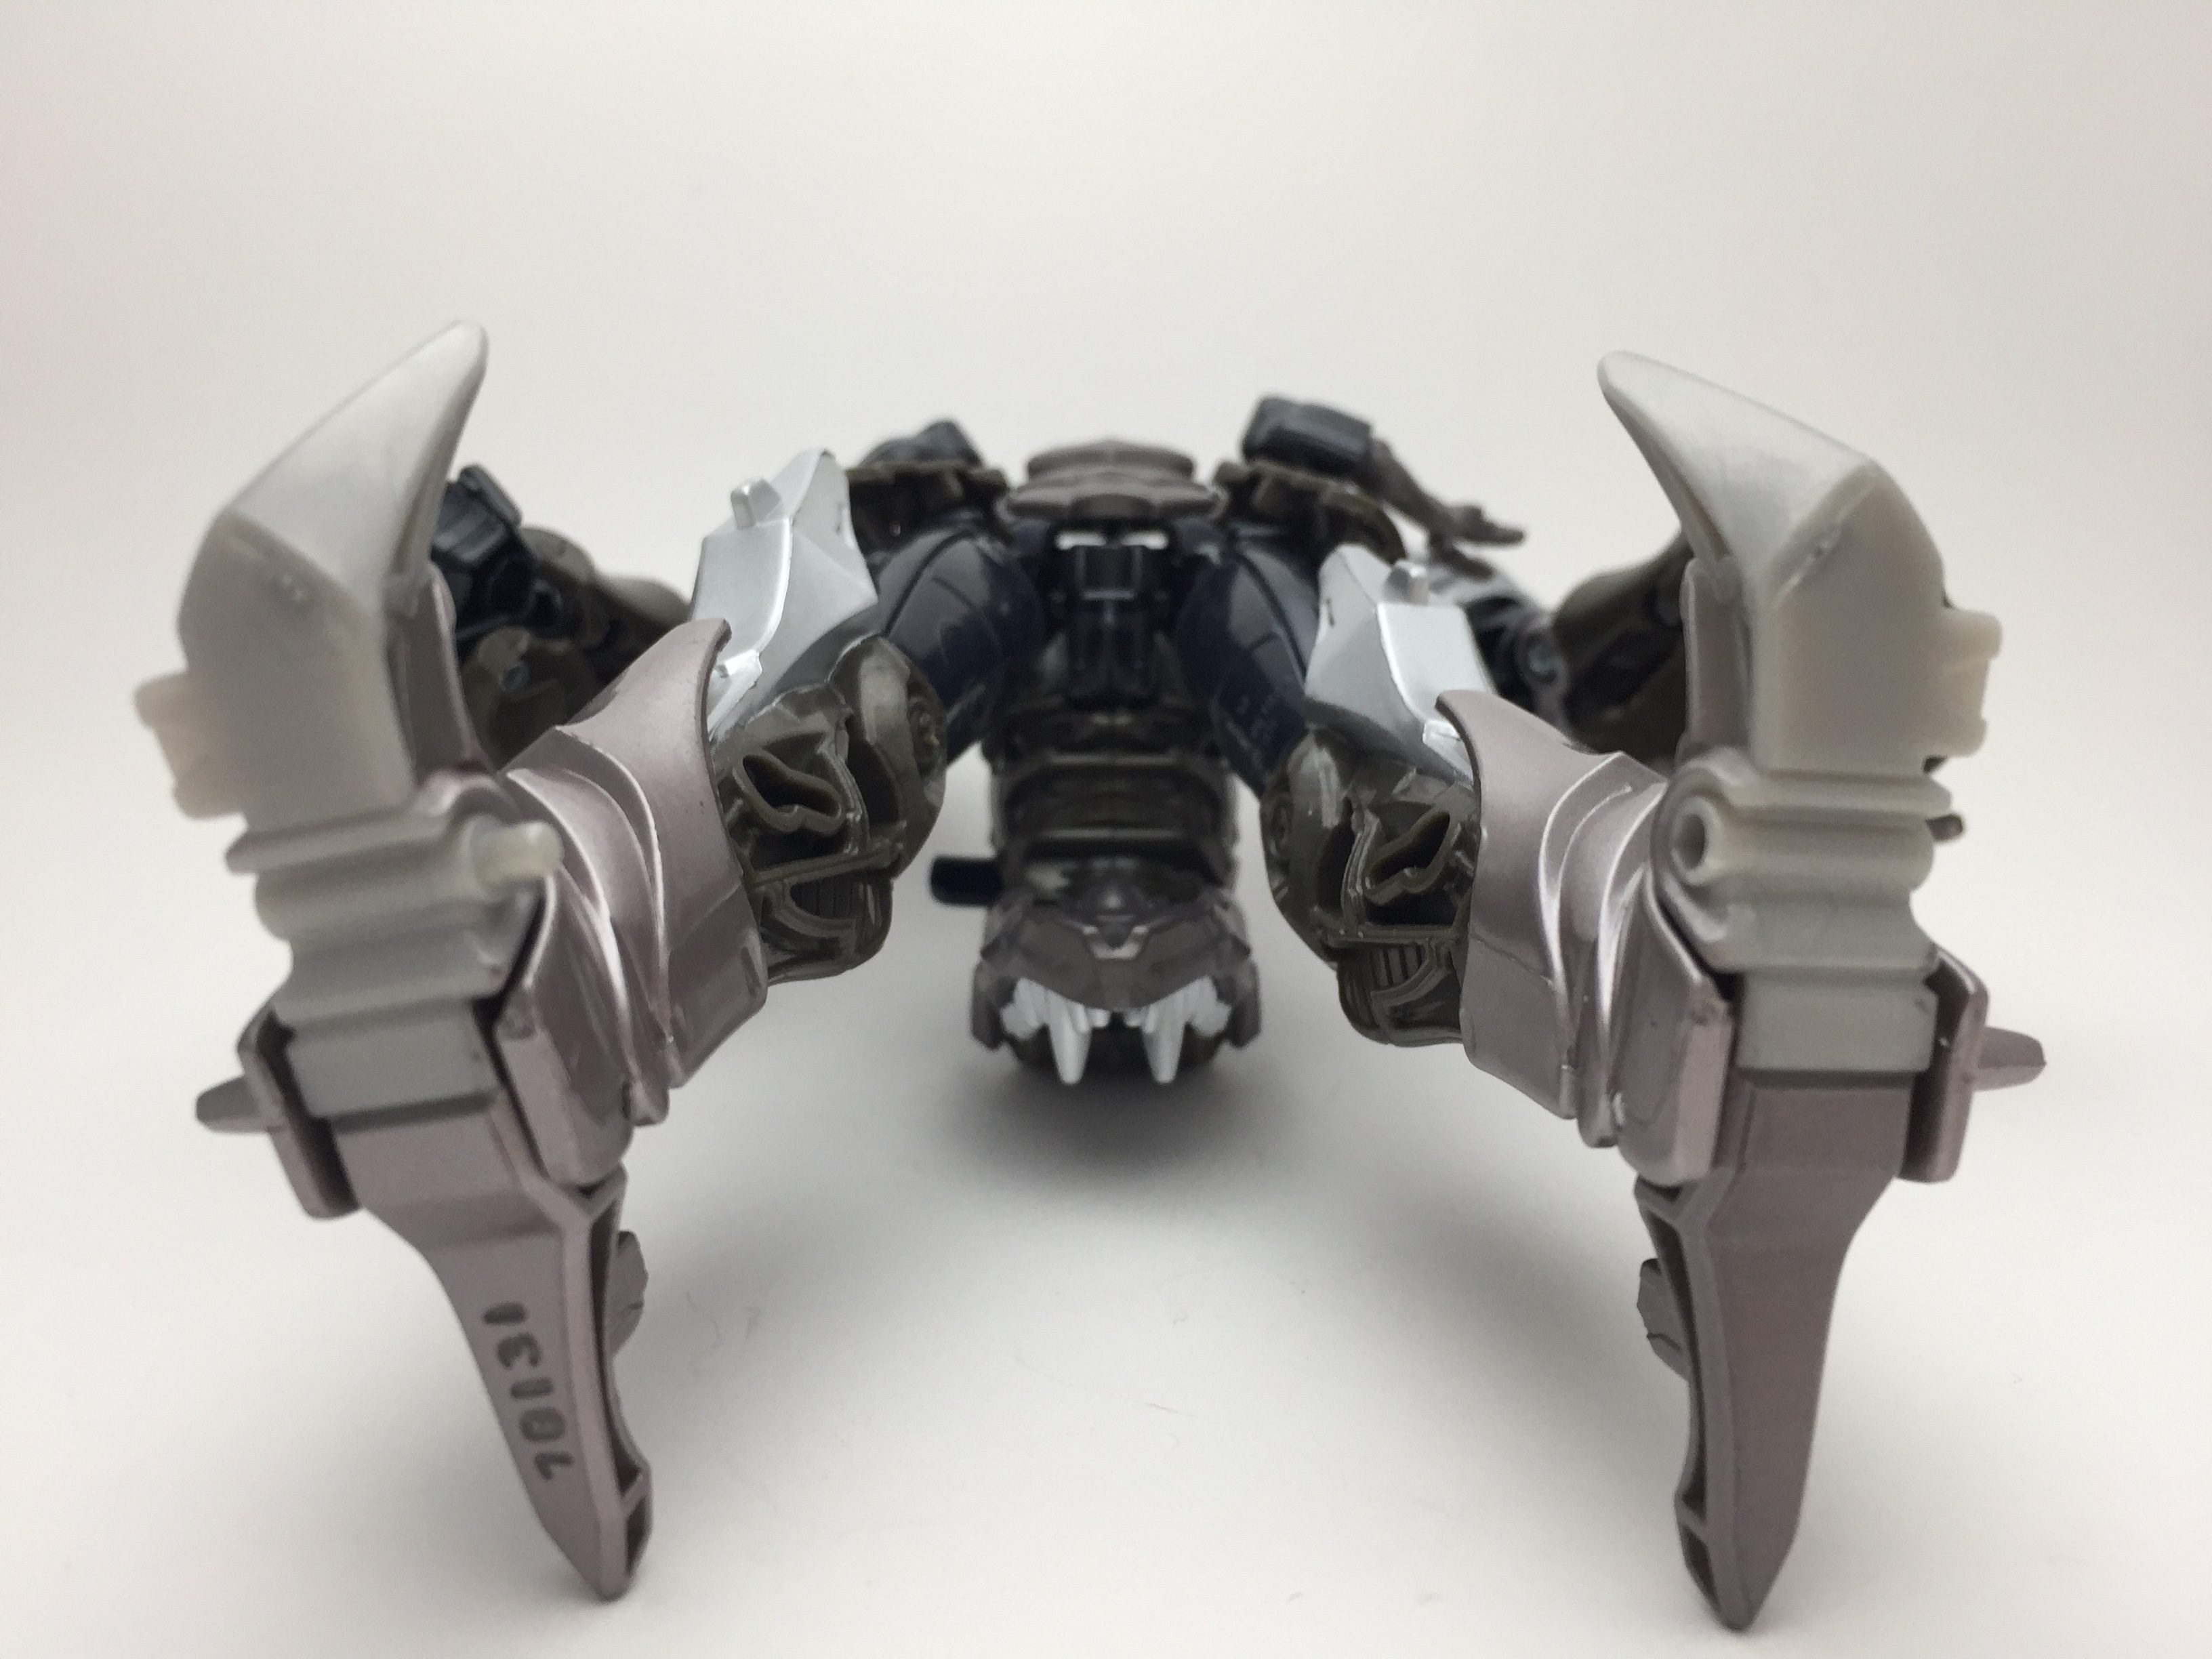 Grimlock, robot mode. (Transformers: The Last Knight)